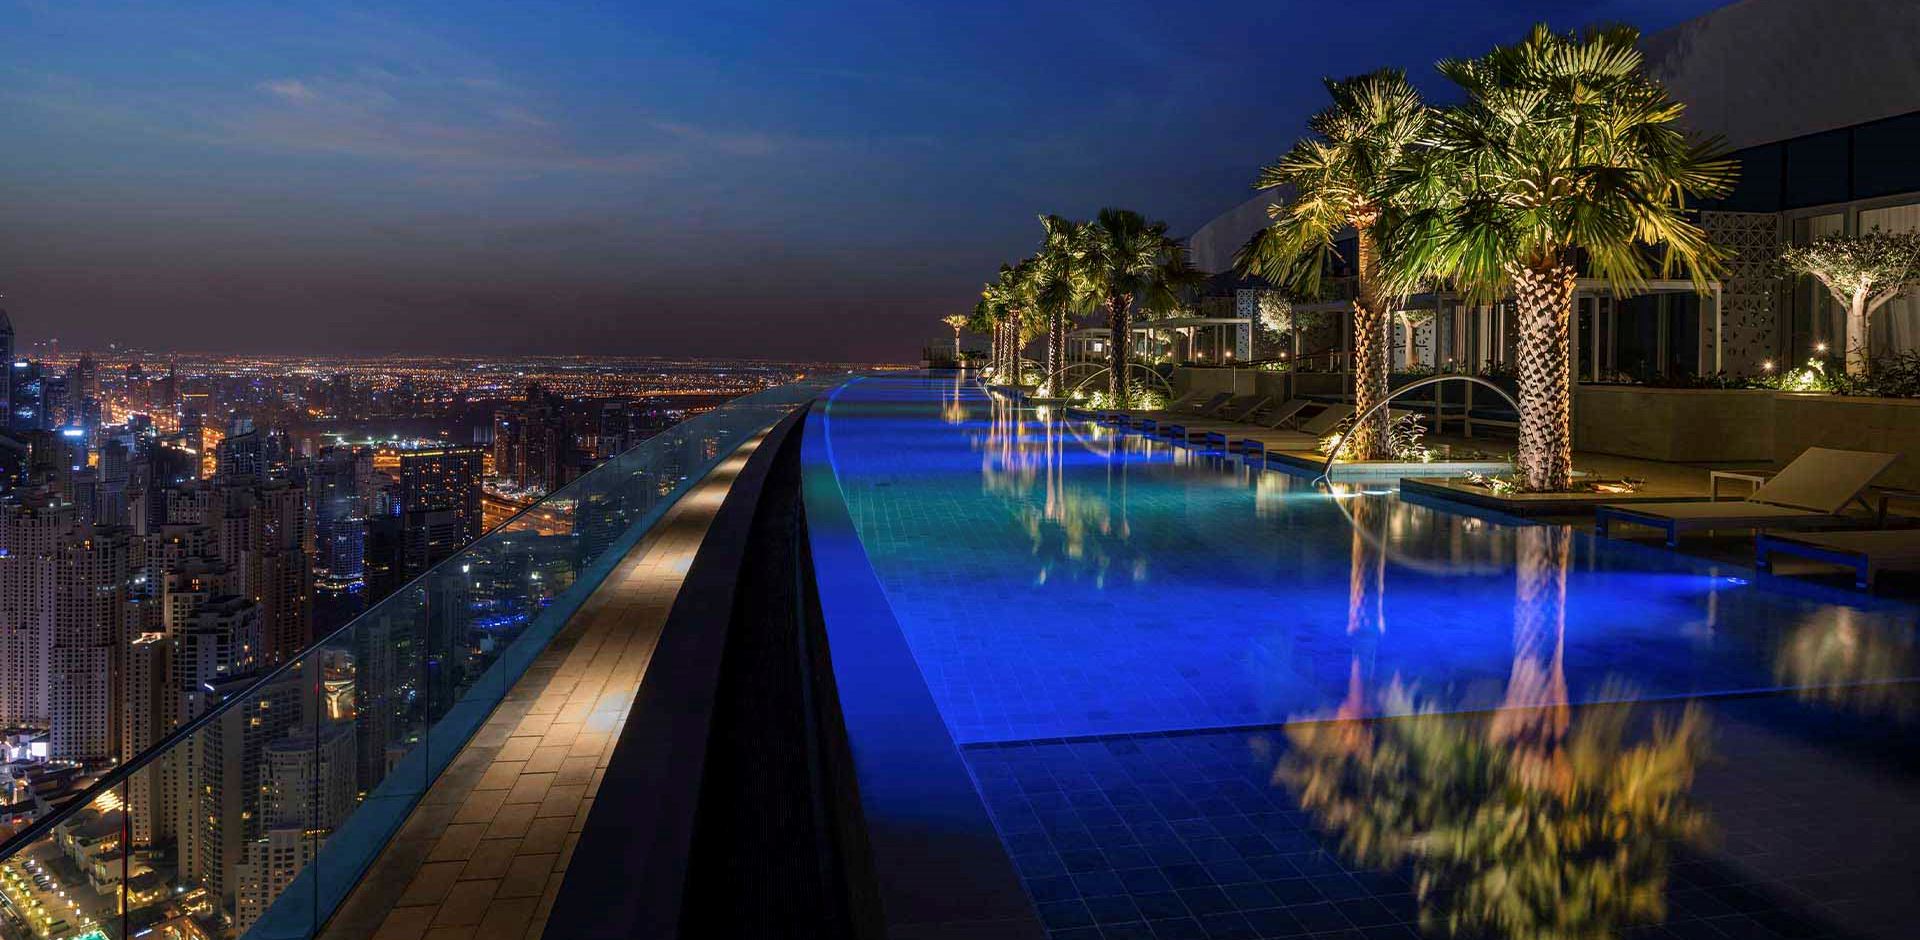 Dubai Address Beach Resort, Infinity Pool Deck Night, Palmer